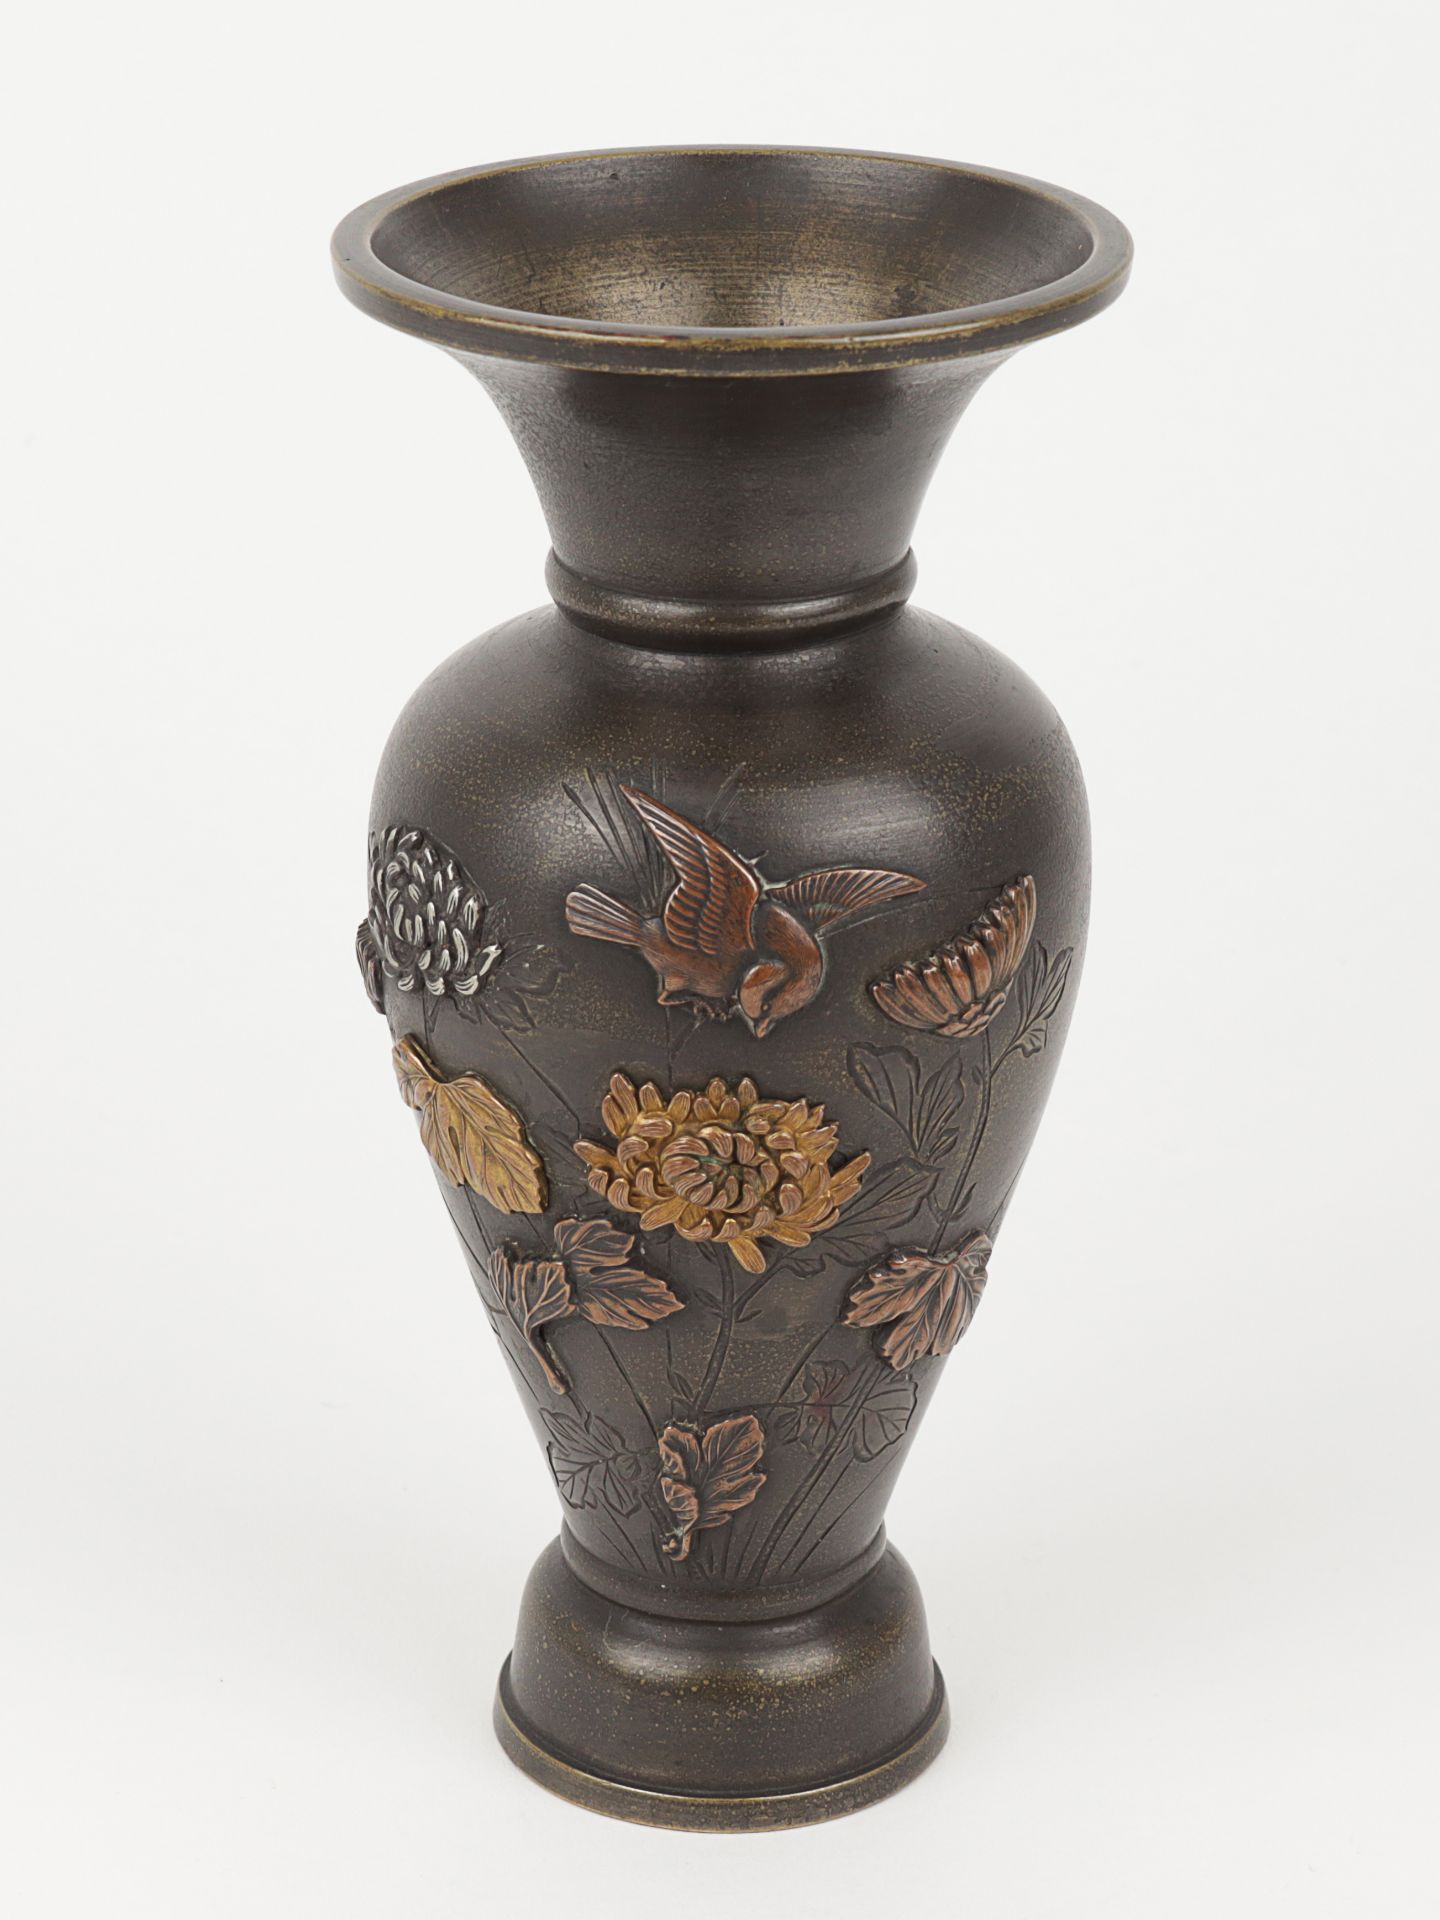 Vase um 1900, Japan, Bronze, reliefiert, Ritzdekor u. Metallauflagen in Kupfer, Messing u. a.,